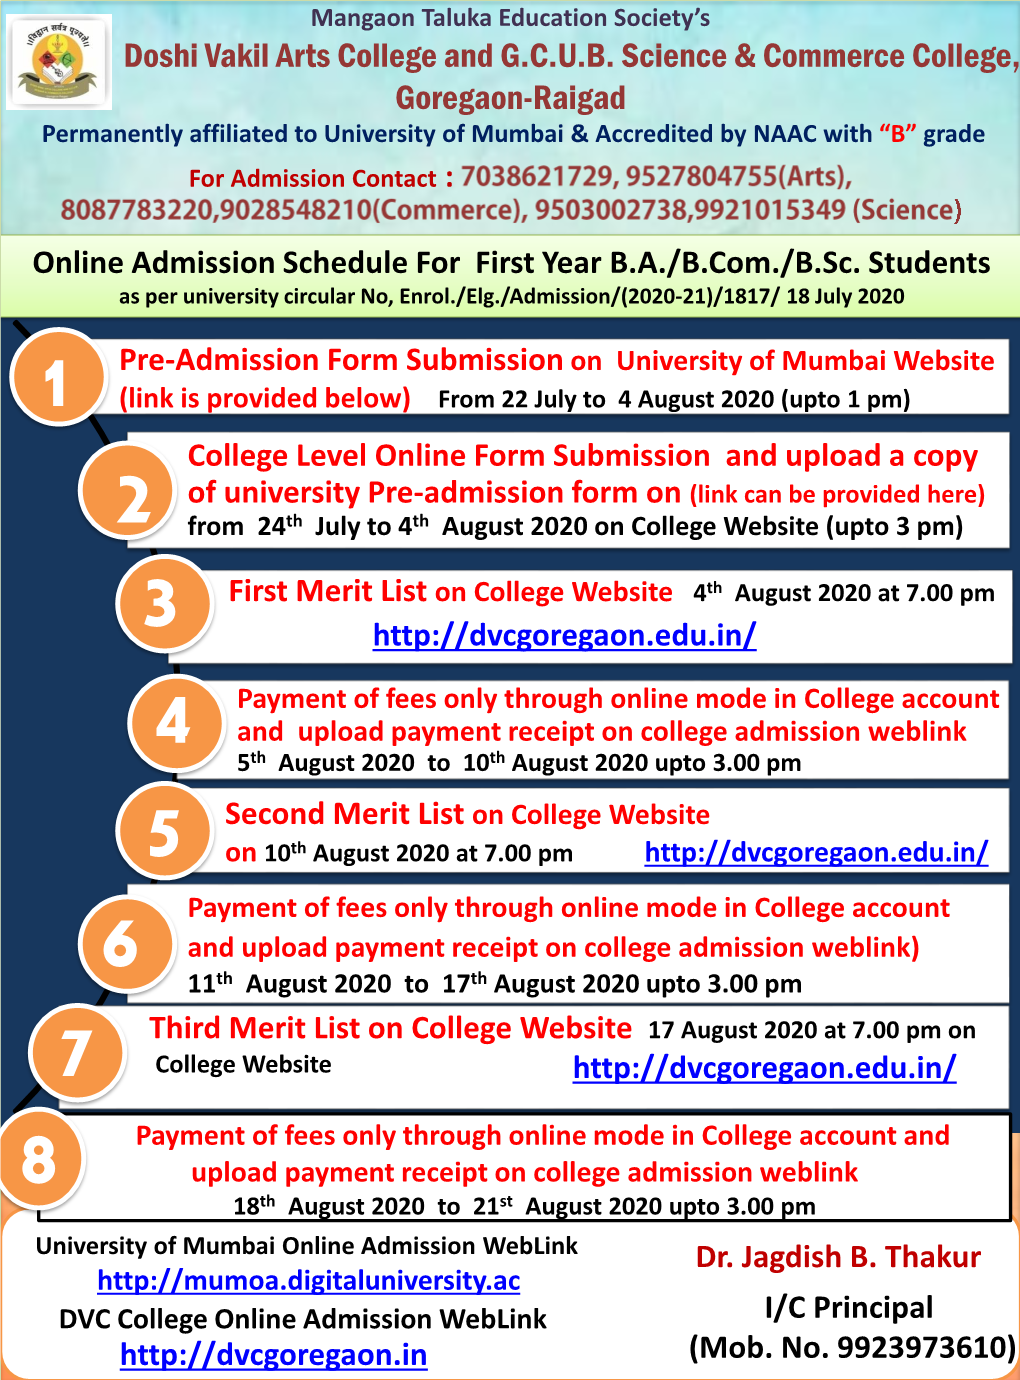 Doshi Vakil Arts College and G.C.U.B. Science & Commerce College, Goregaon-Raigad